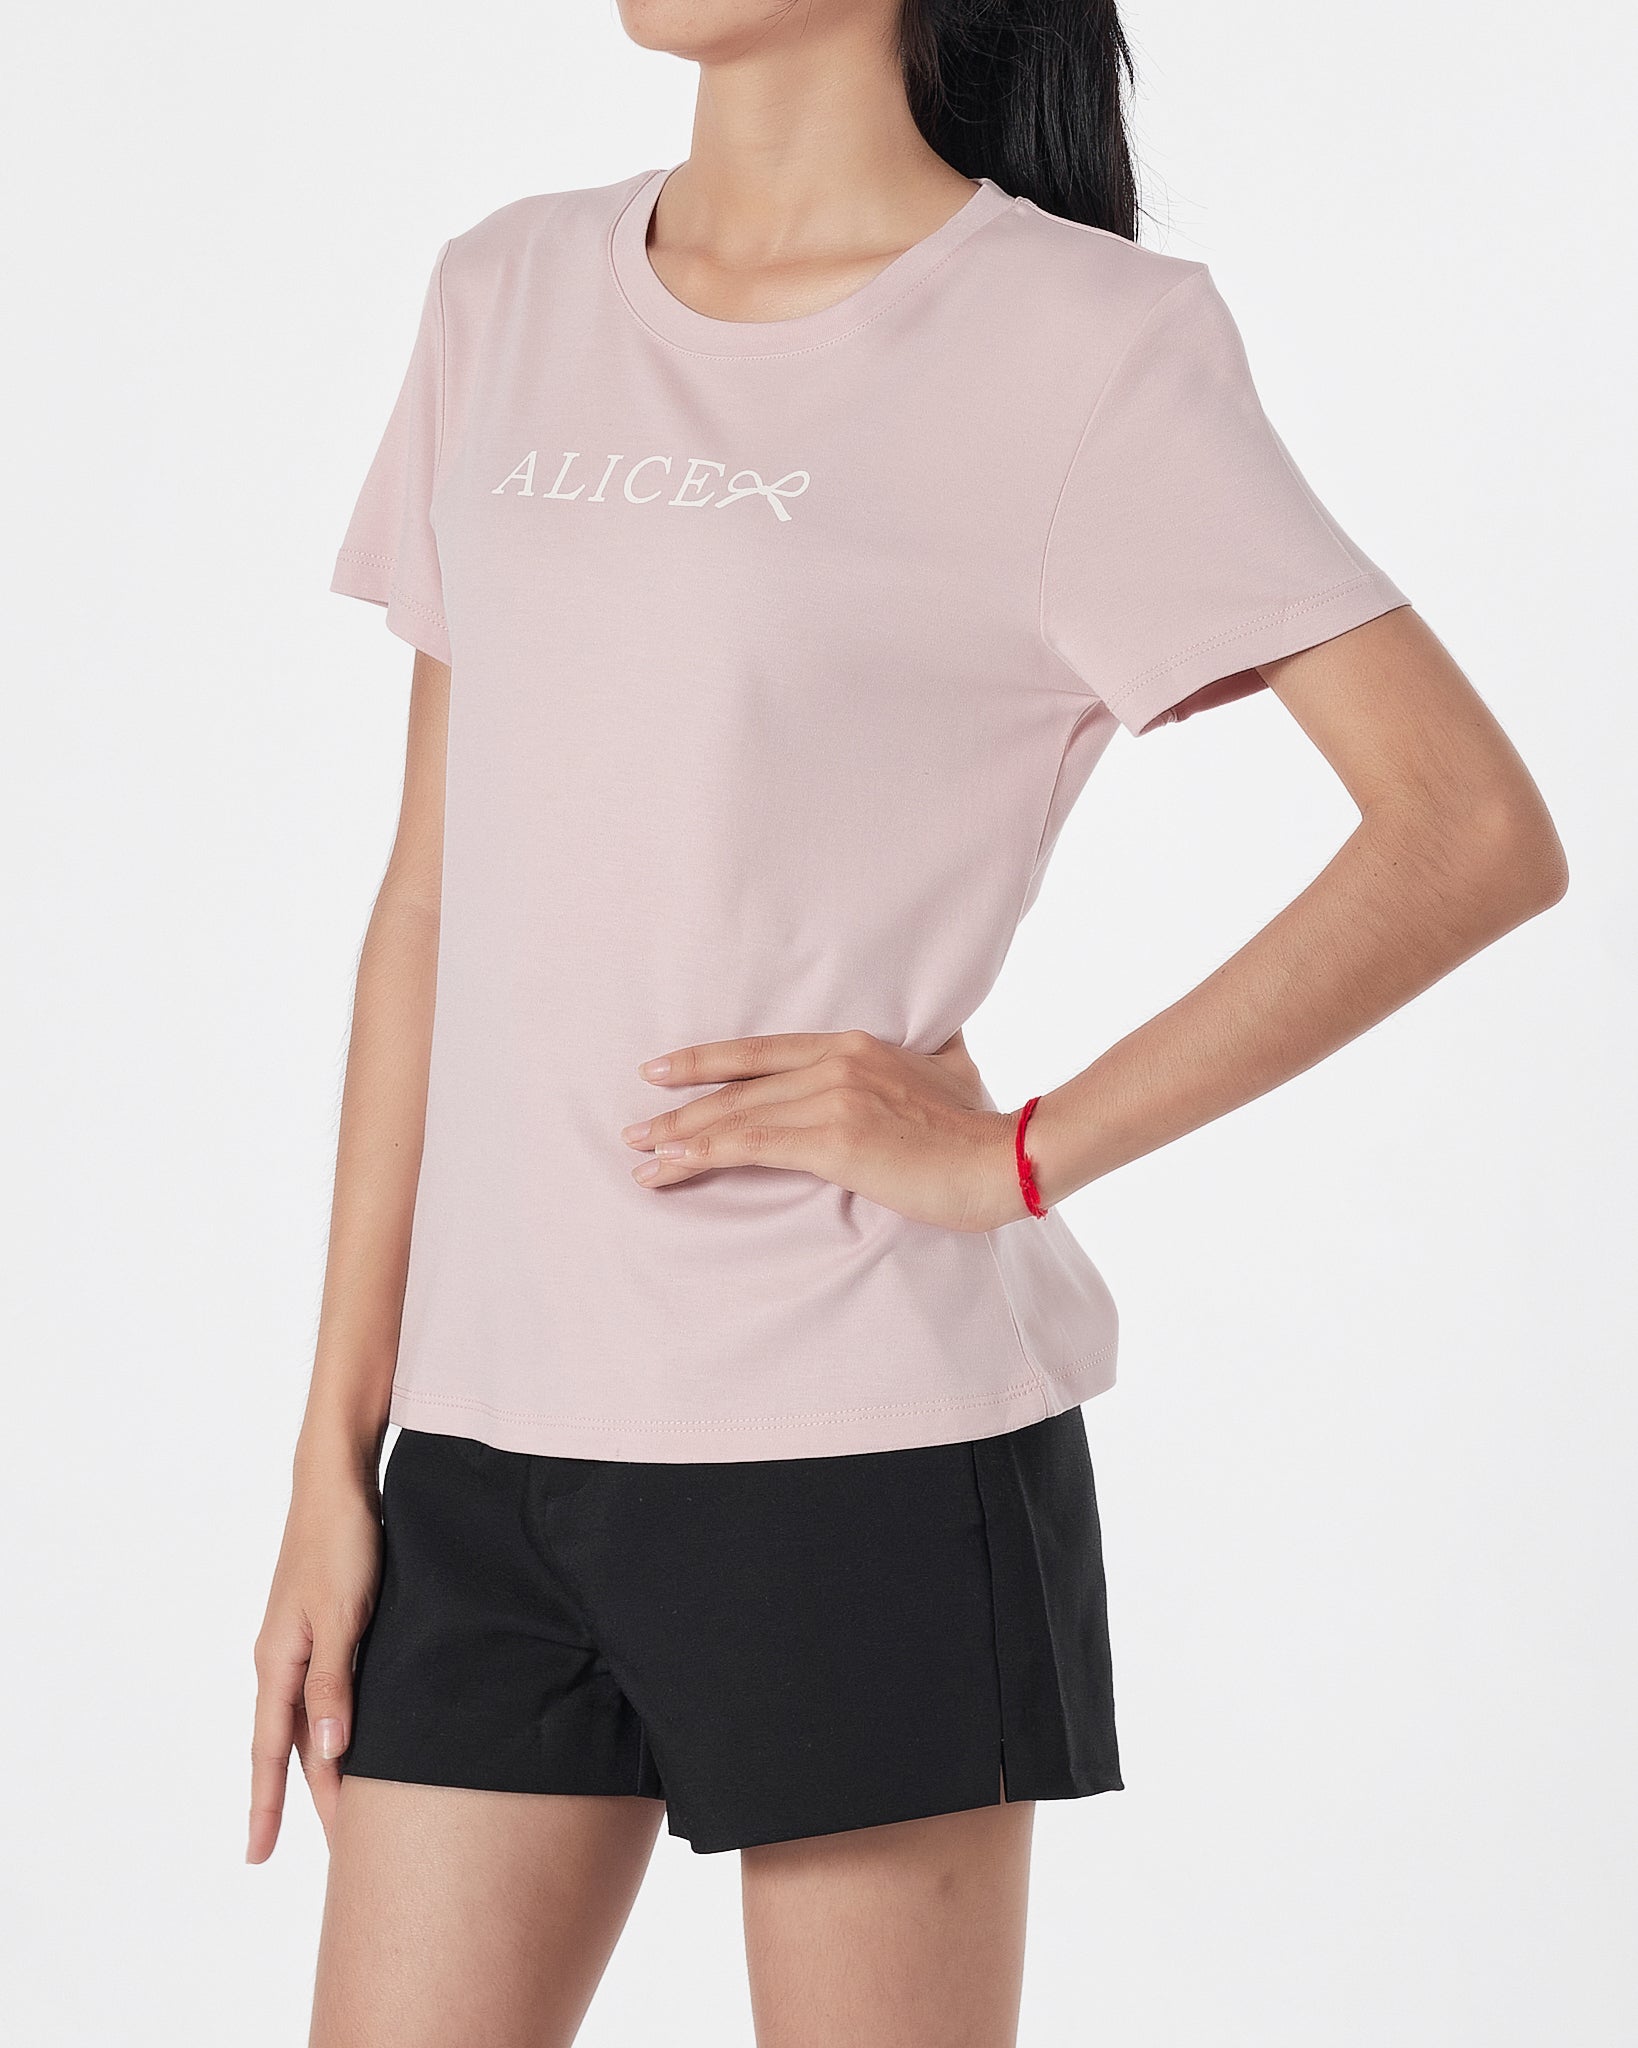 ALICE Lady Light Pink T-Shirt 12.90